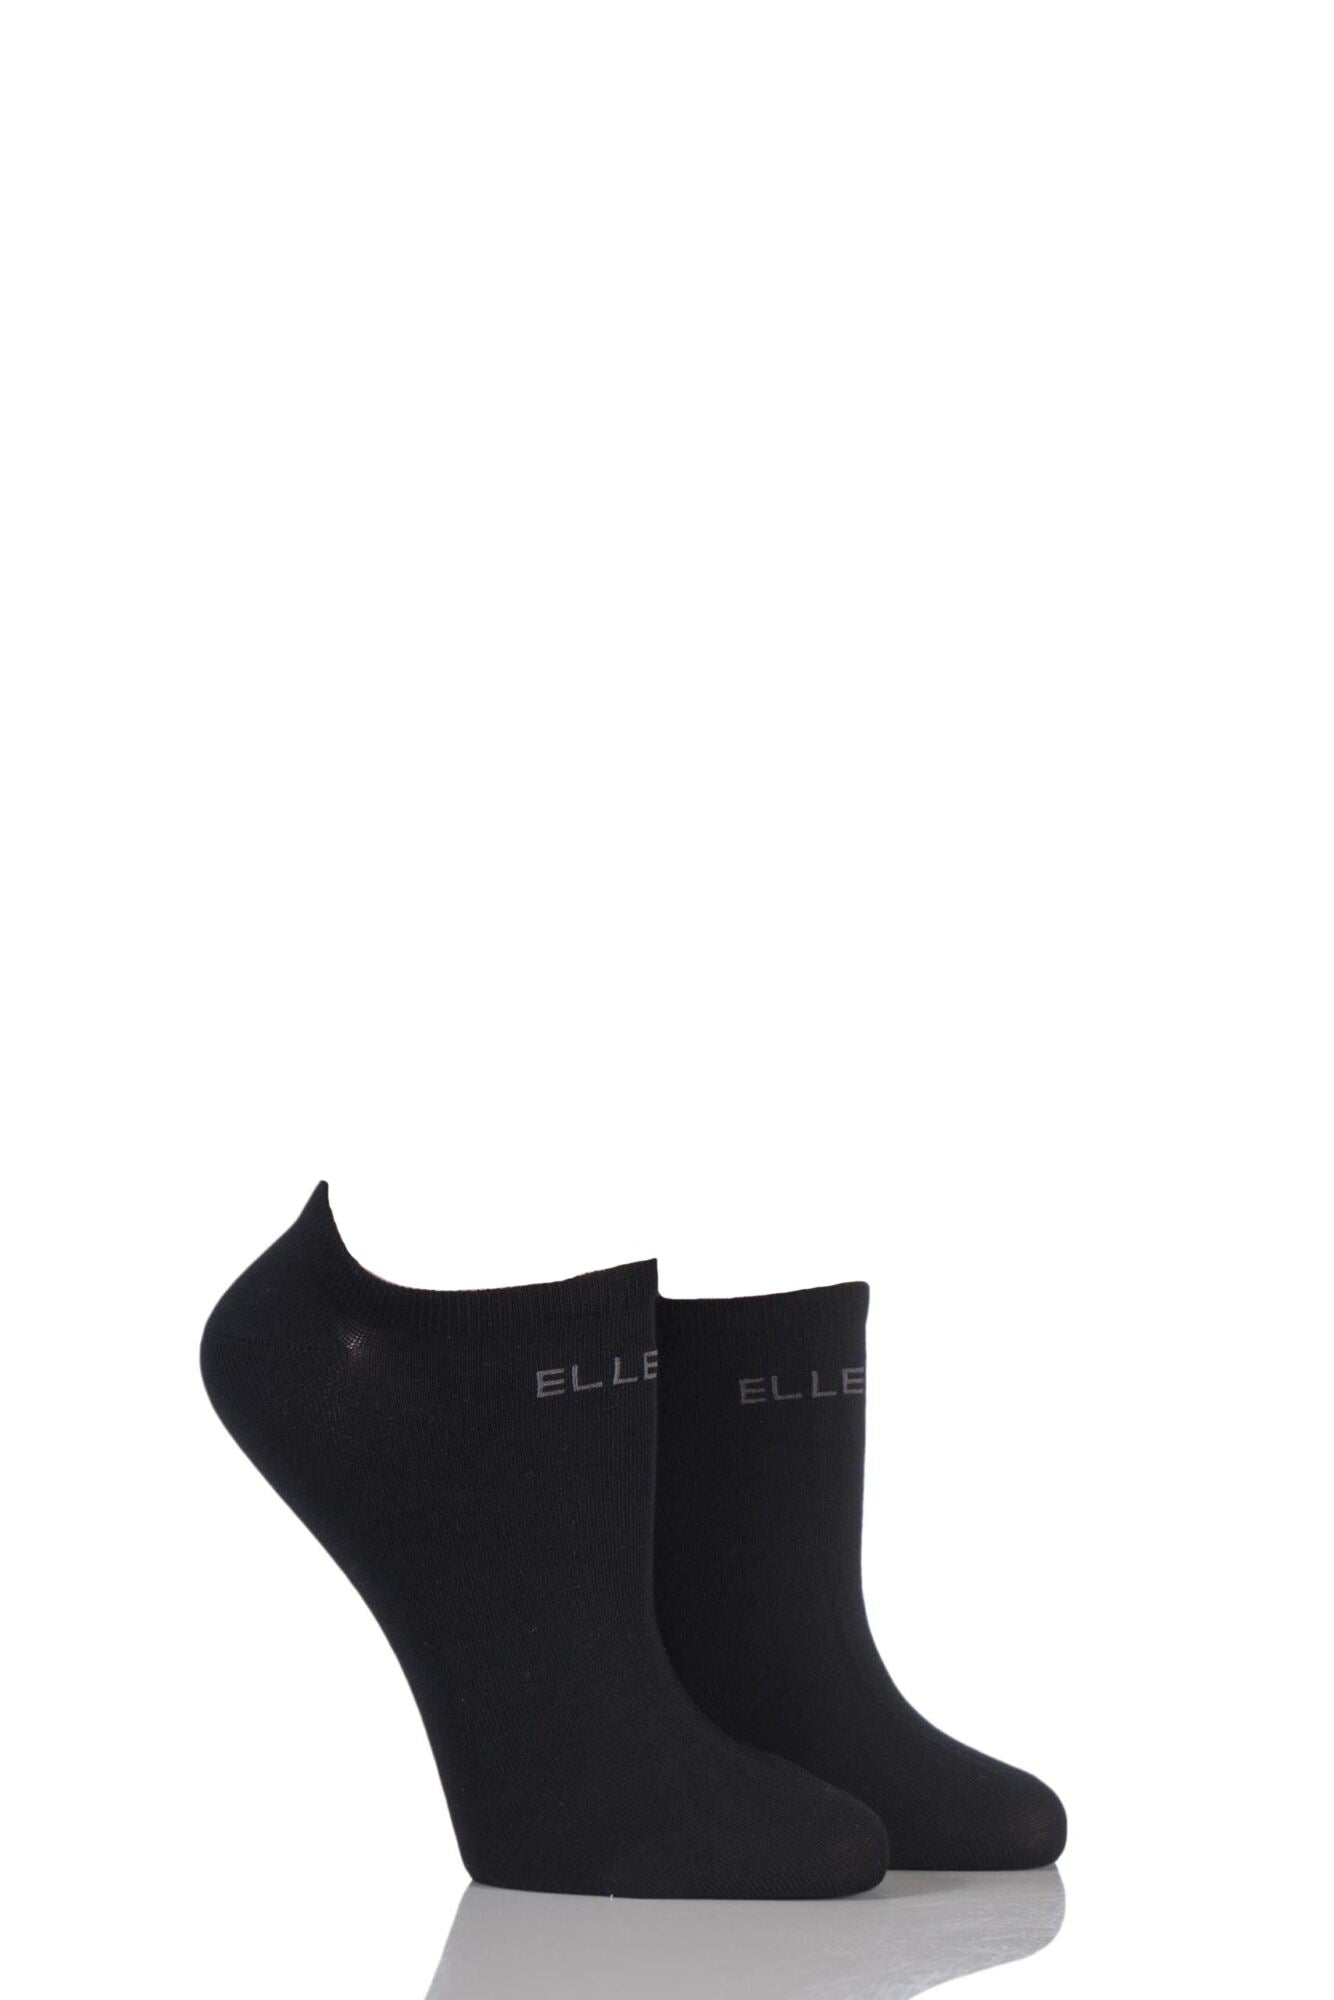 Elle-Bamboo No-Show Socks-Black